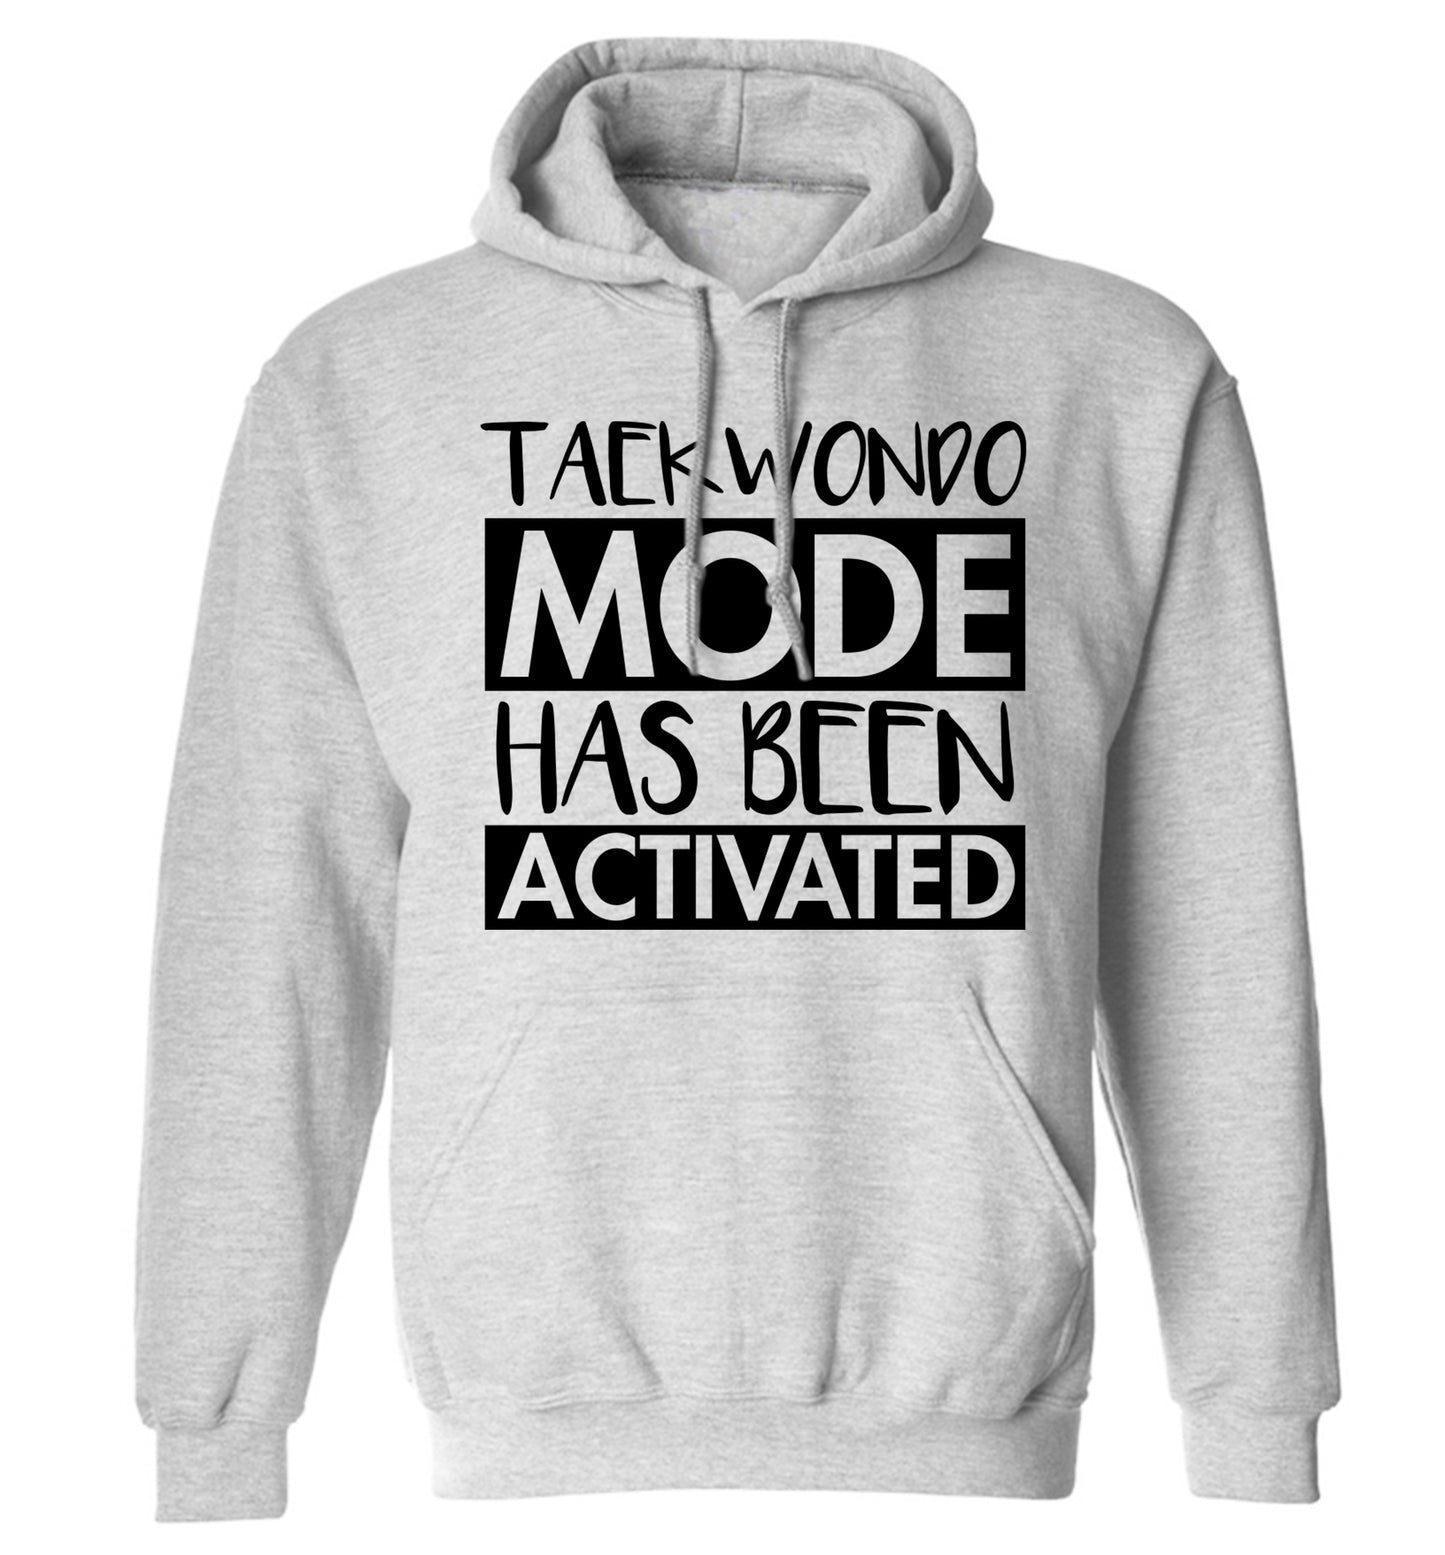 Taekwondo mode activated adults unisex grey hoodie 2XL